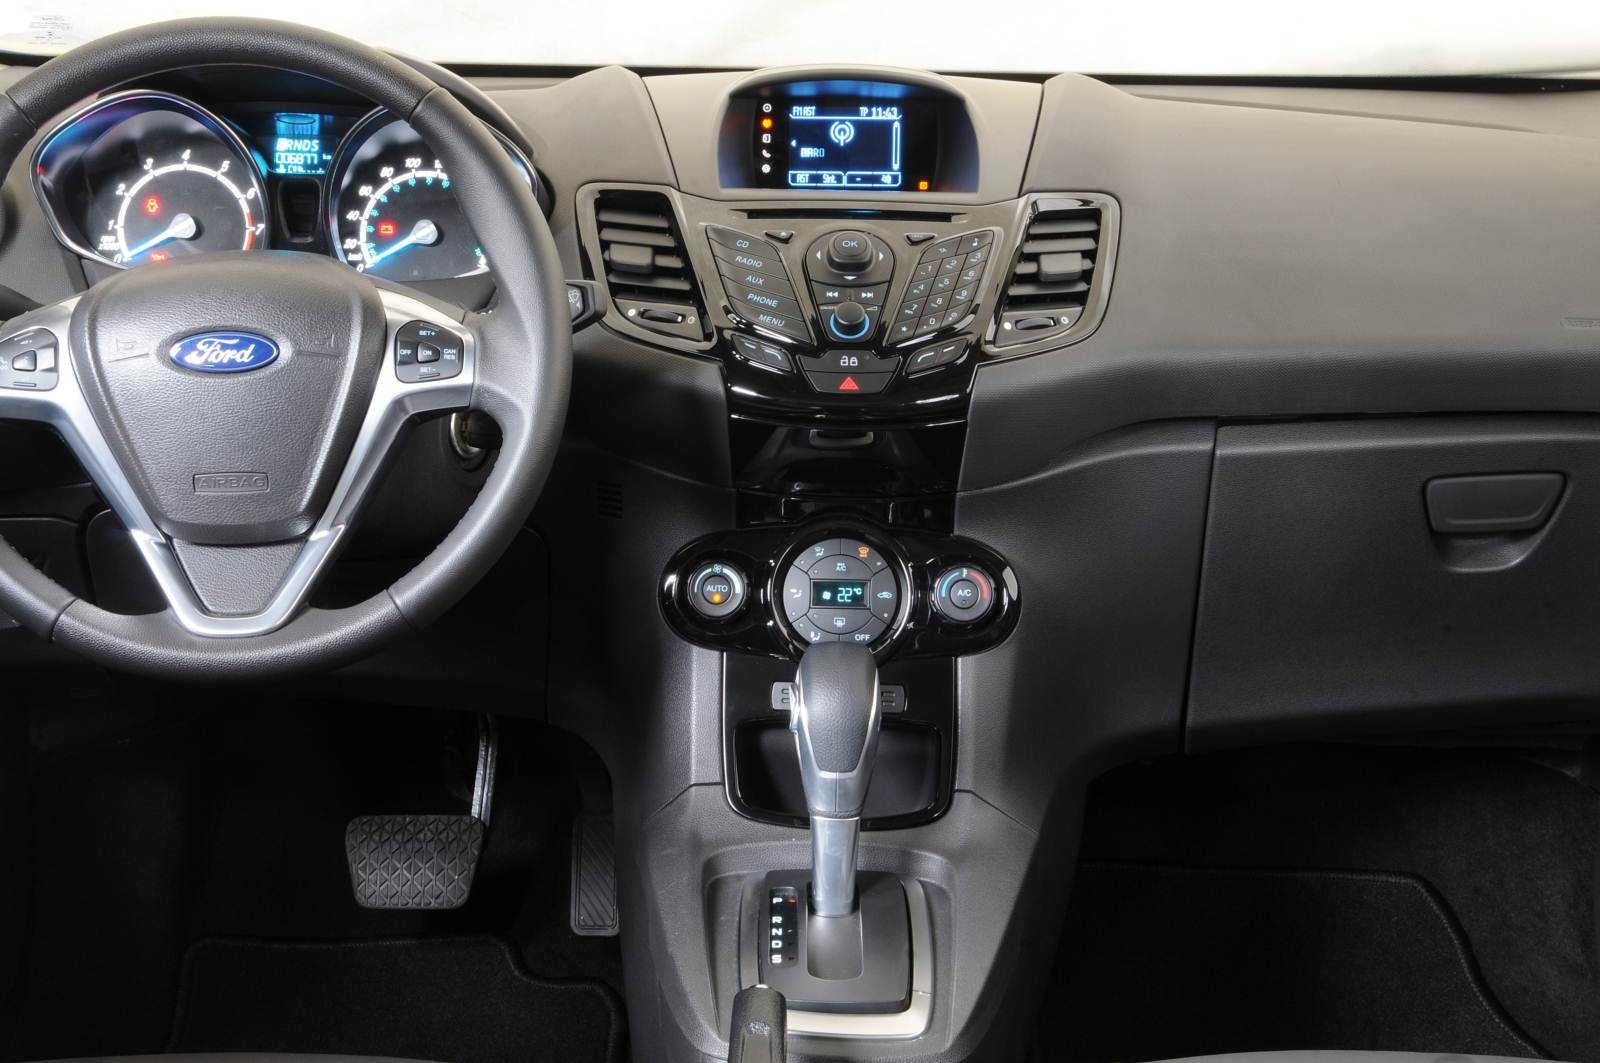 Ford New Fiesta 2015  - interior